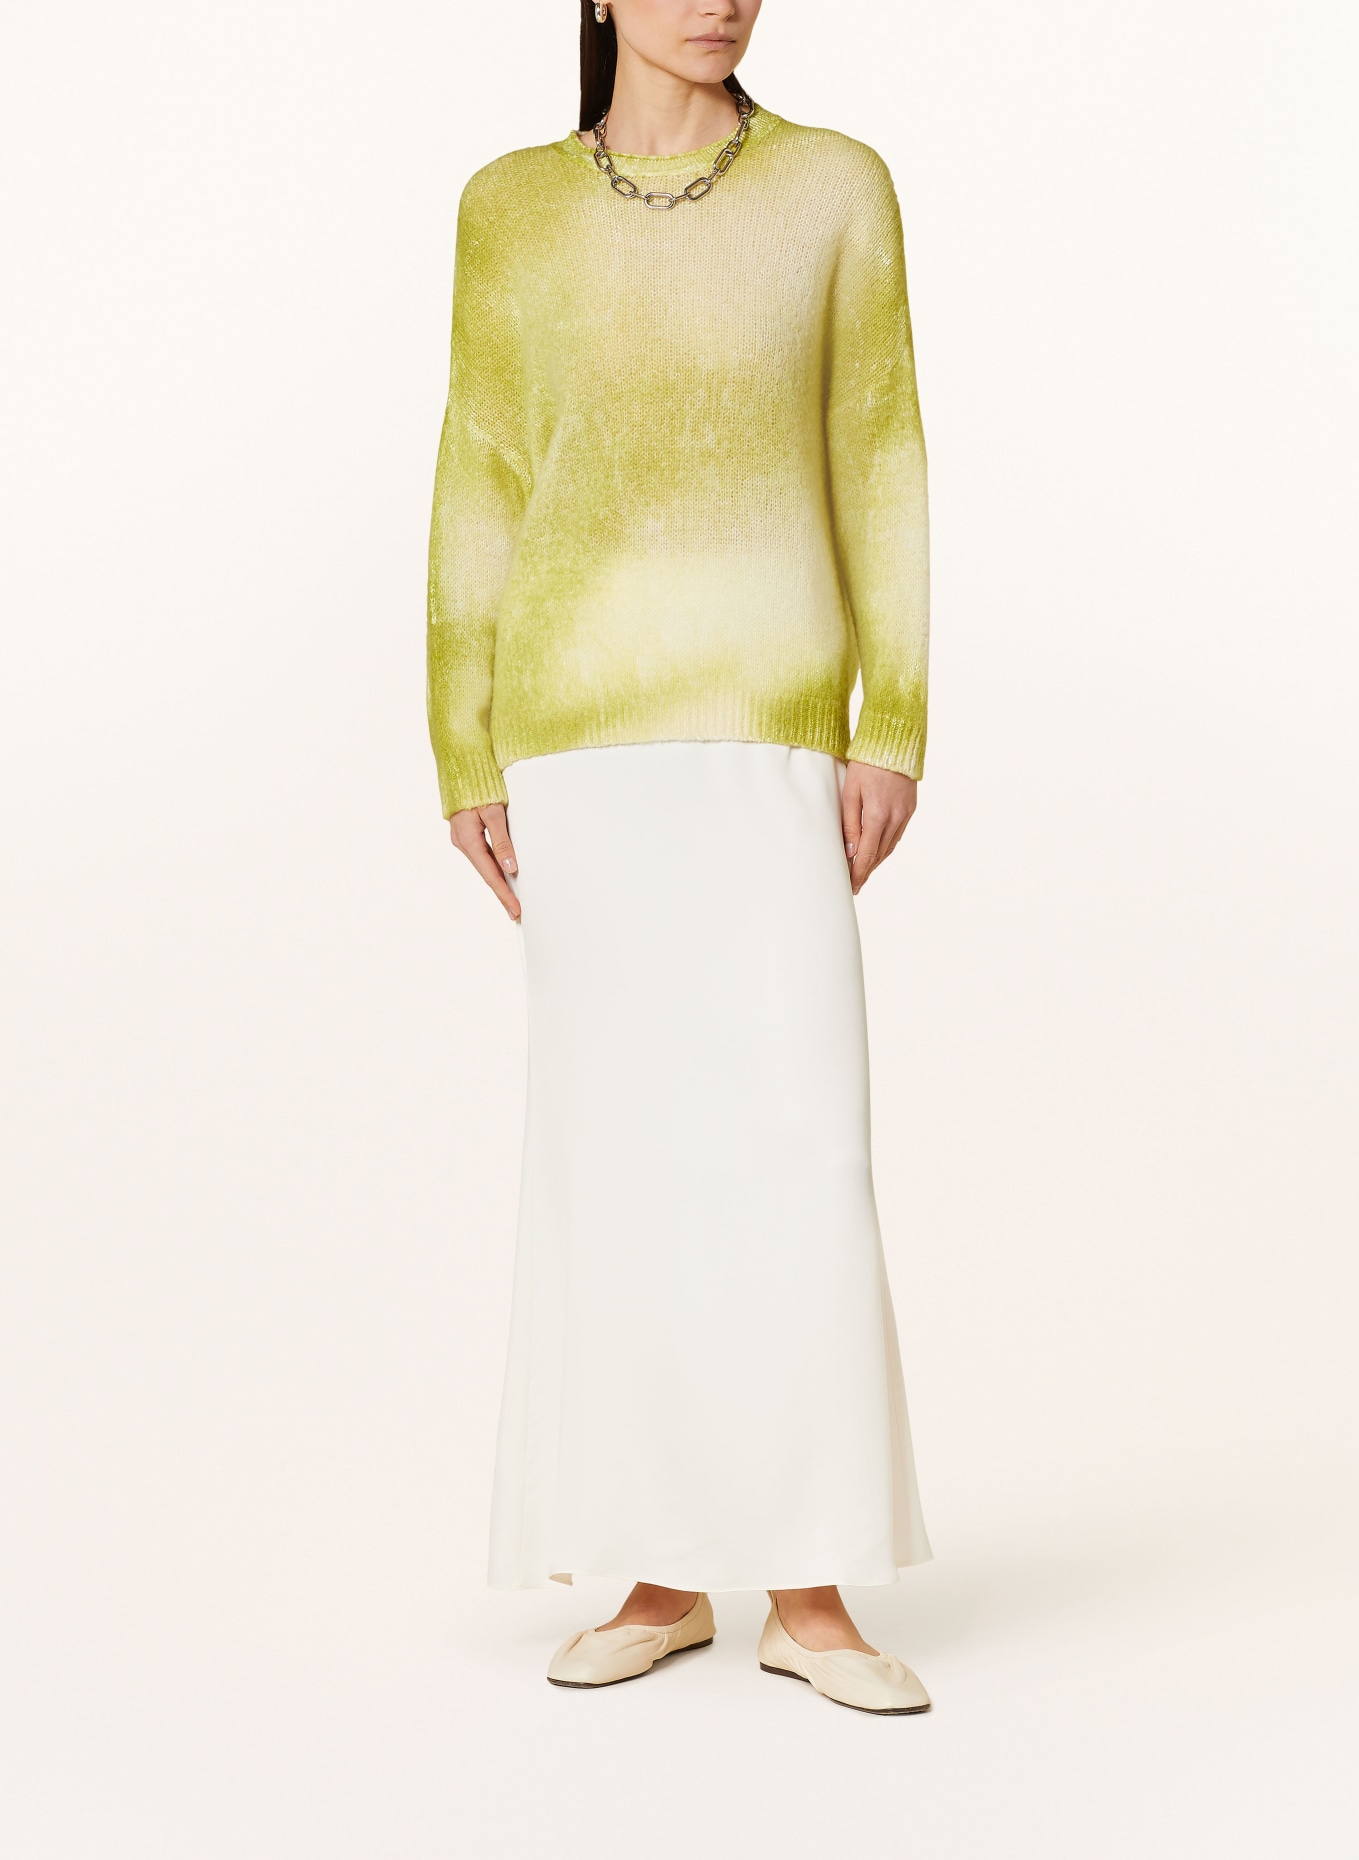 AVANT TOI Cashmere-Pullover, Farbe: 19 lime lime (Bild 2)